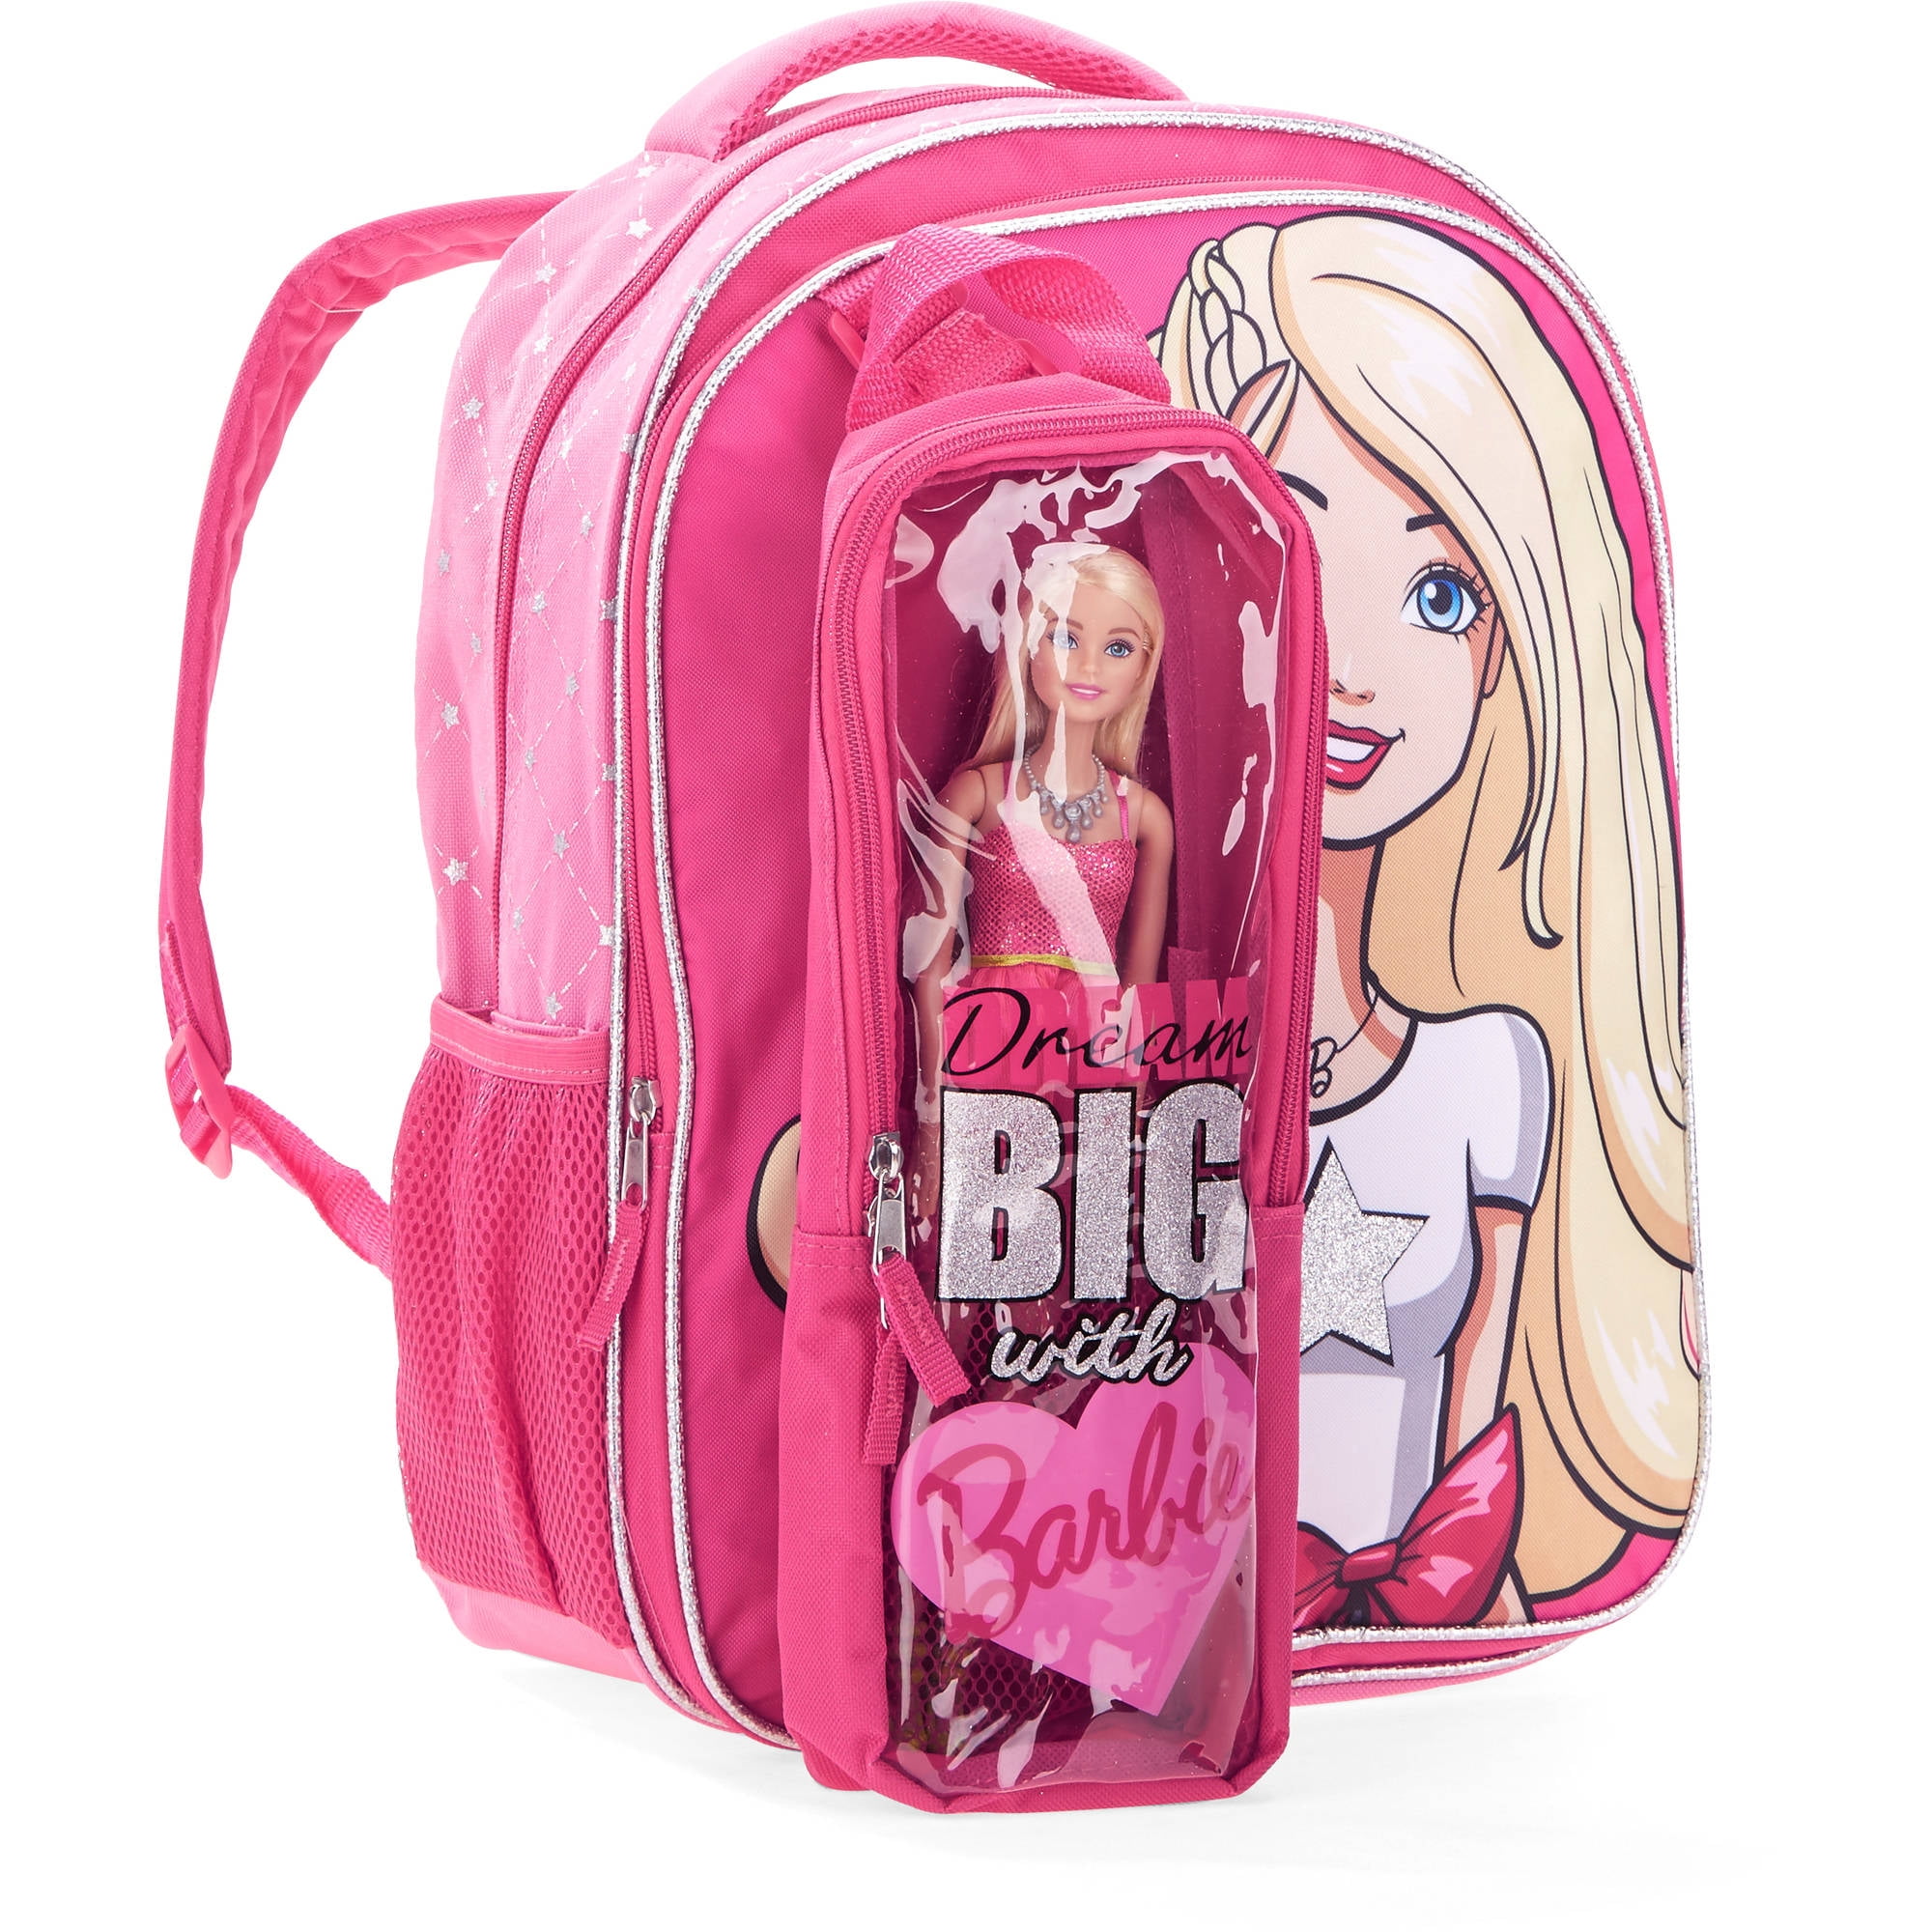 Barbie Dream Big Girl's Backpack with Bonus Barbie Doll